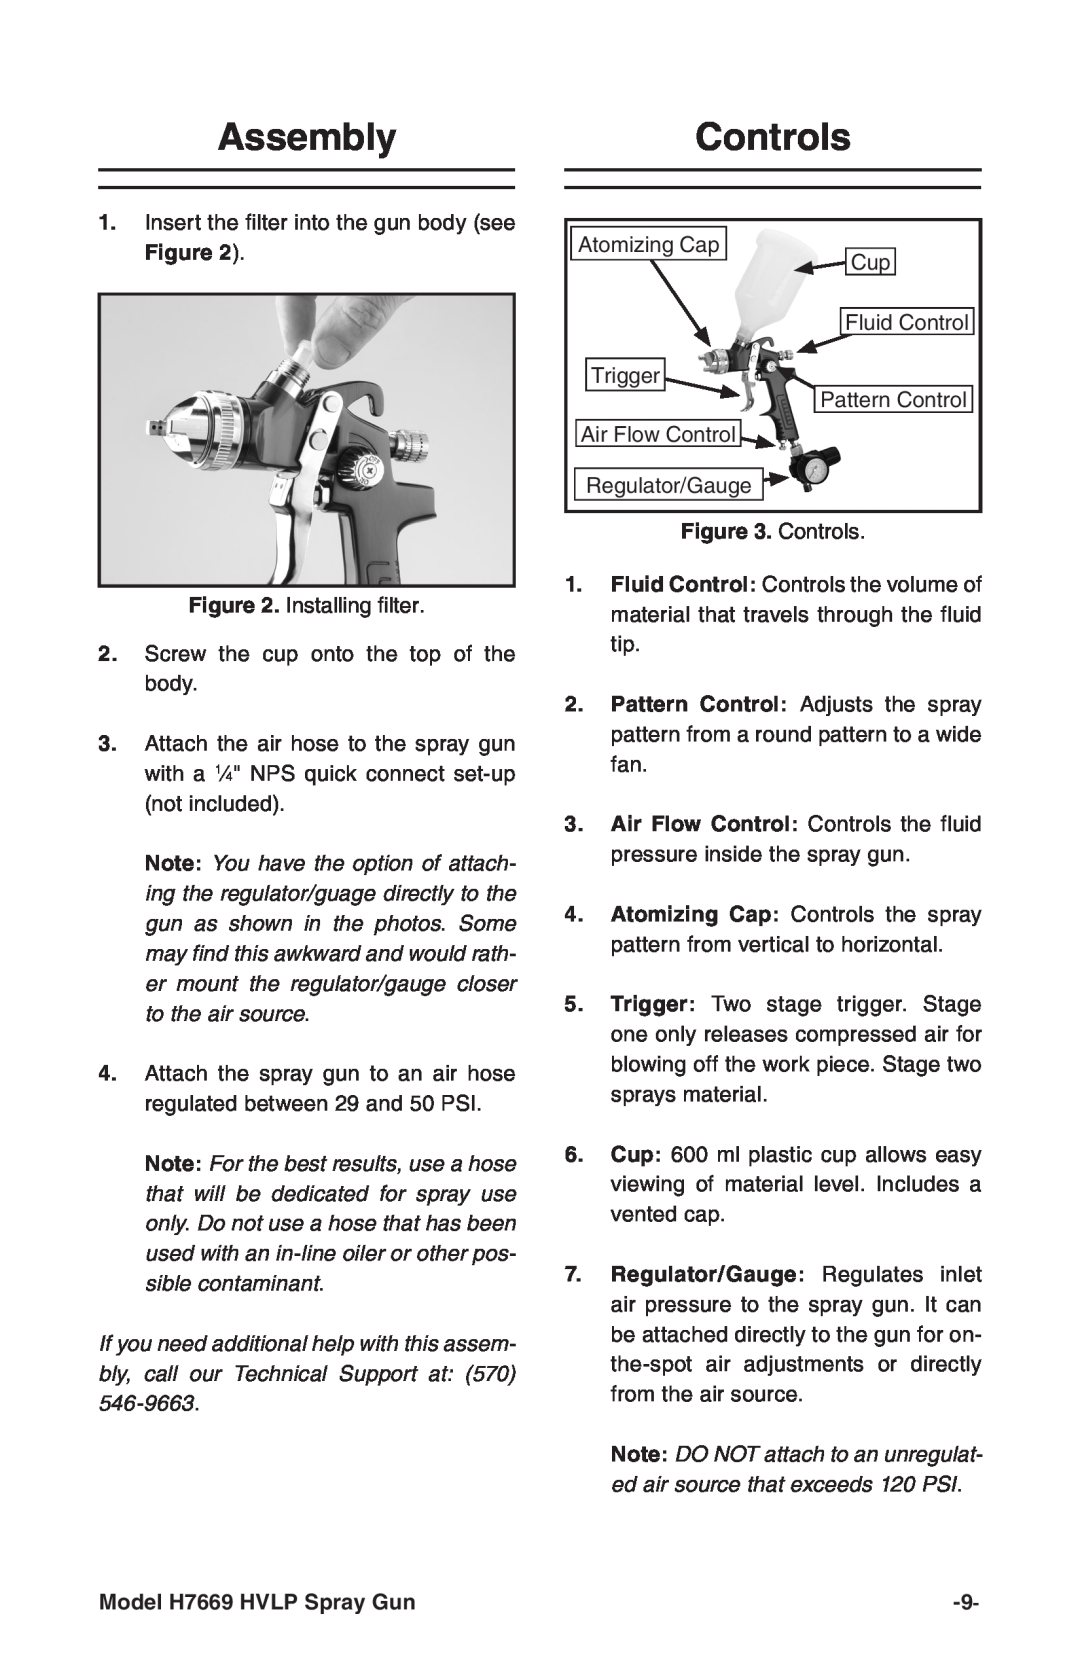 Grizzly instruction manual AssemblyControls, Model H7669 HVLP Spray Gun 